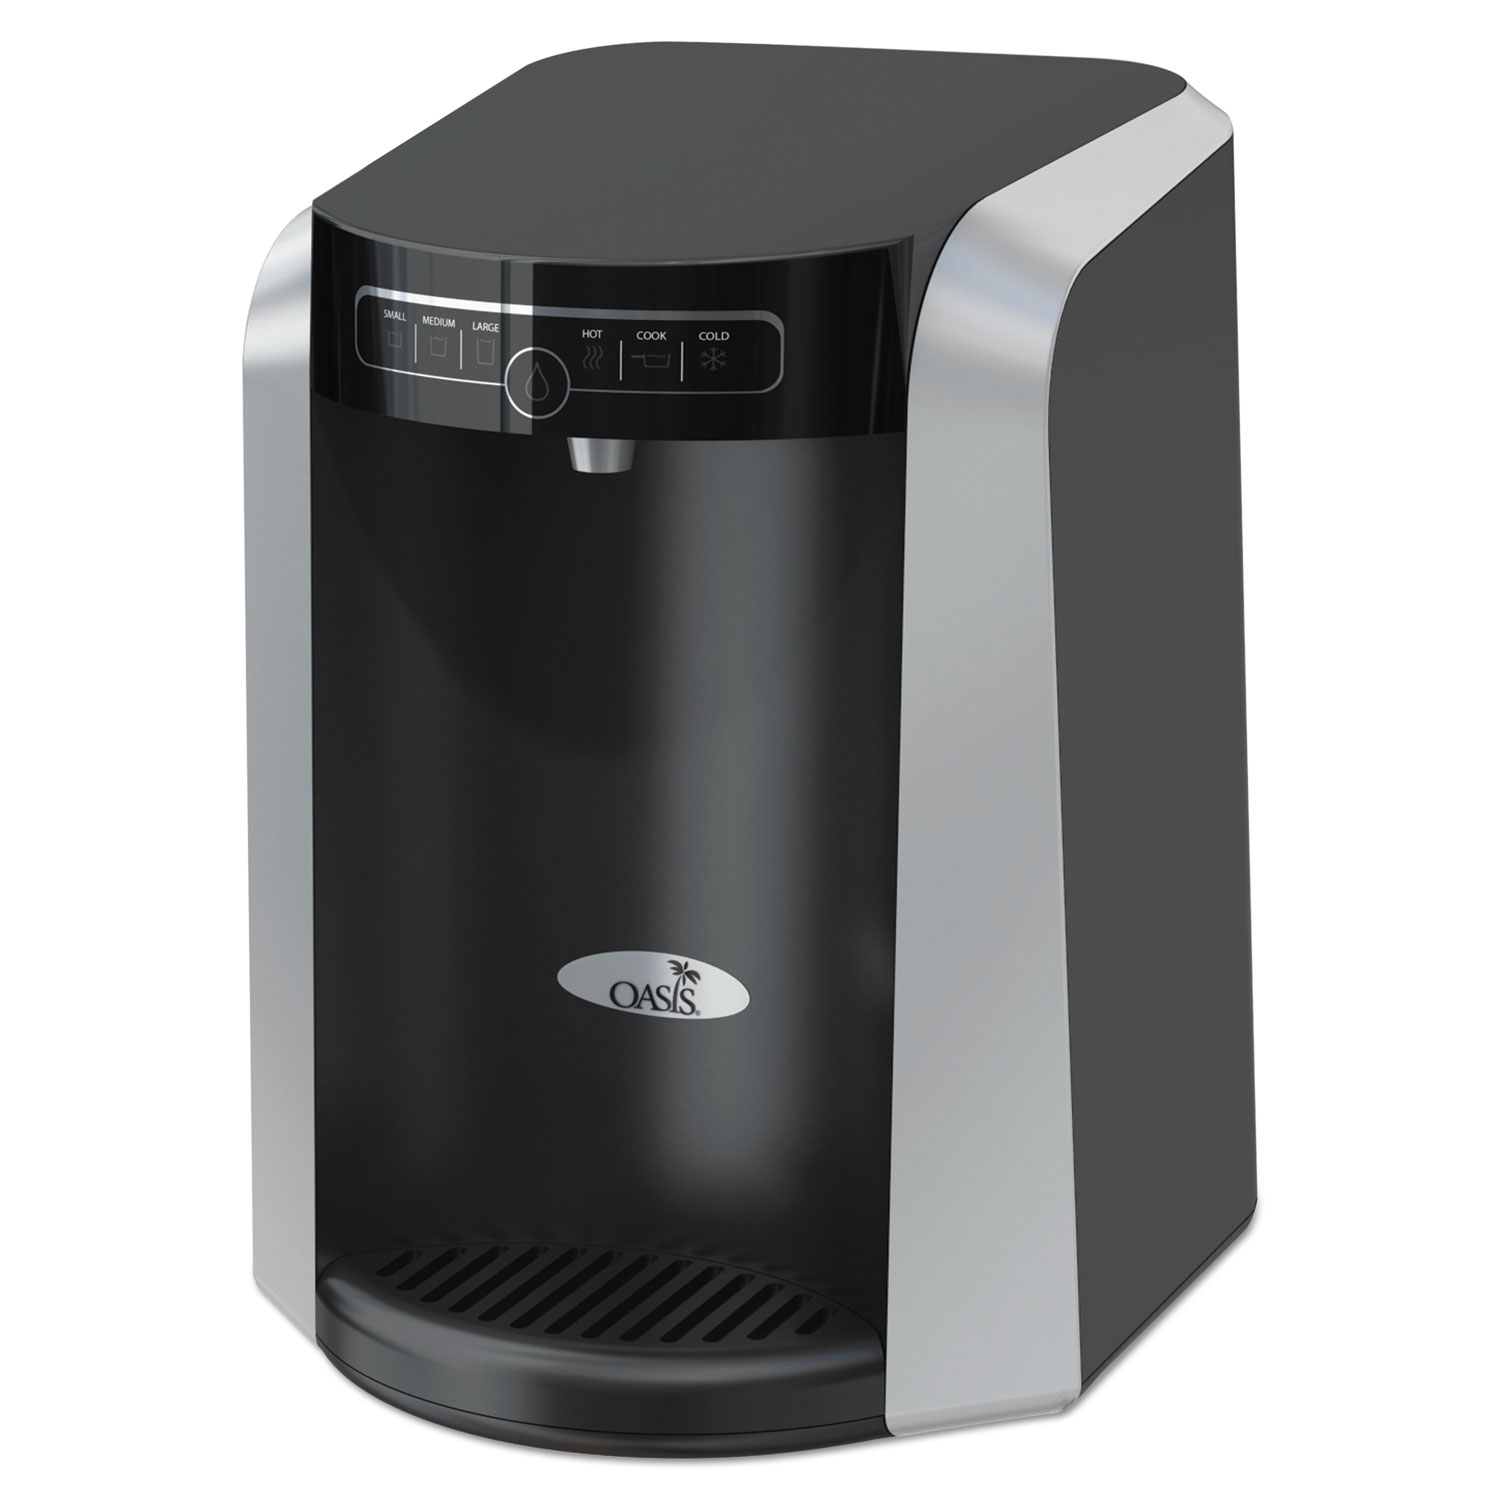  Oasis 506336C Aquarius Counter Top Hot N Cold Water Cooler, 177 oz/Cold Water per Hour; 270 oz/Hot Water per Hour, Black (OAS506336C) 